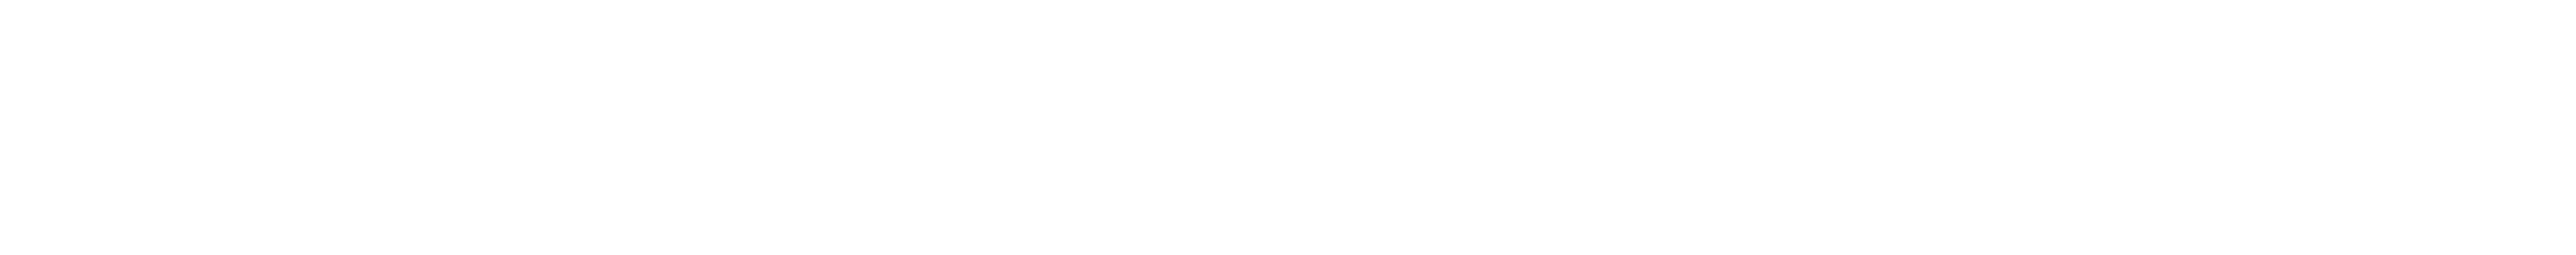 Creative Communication Initiative - En del av Riksteatern